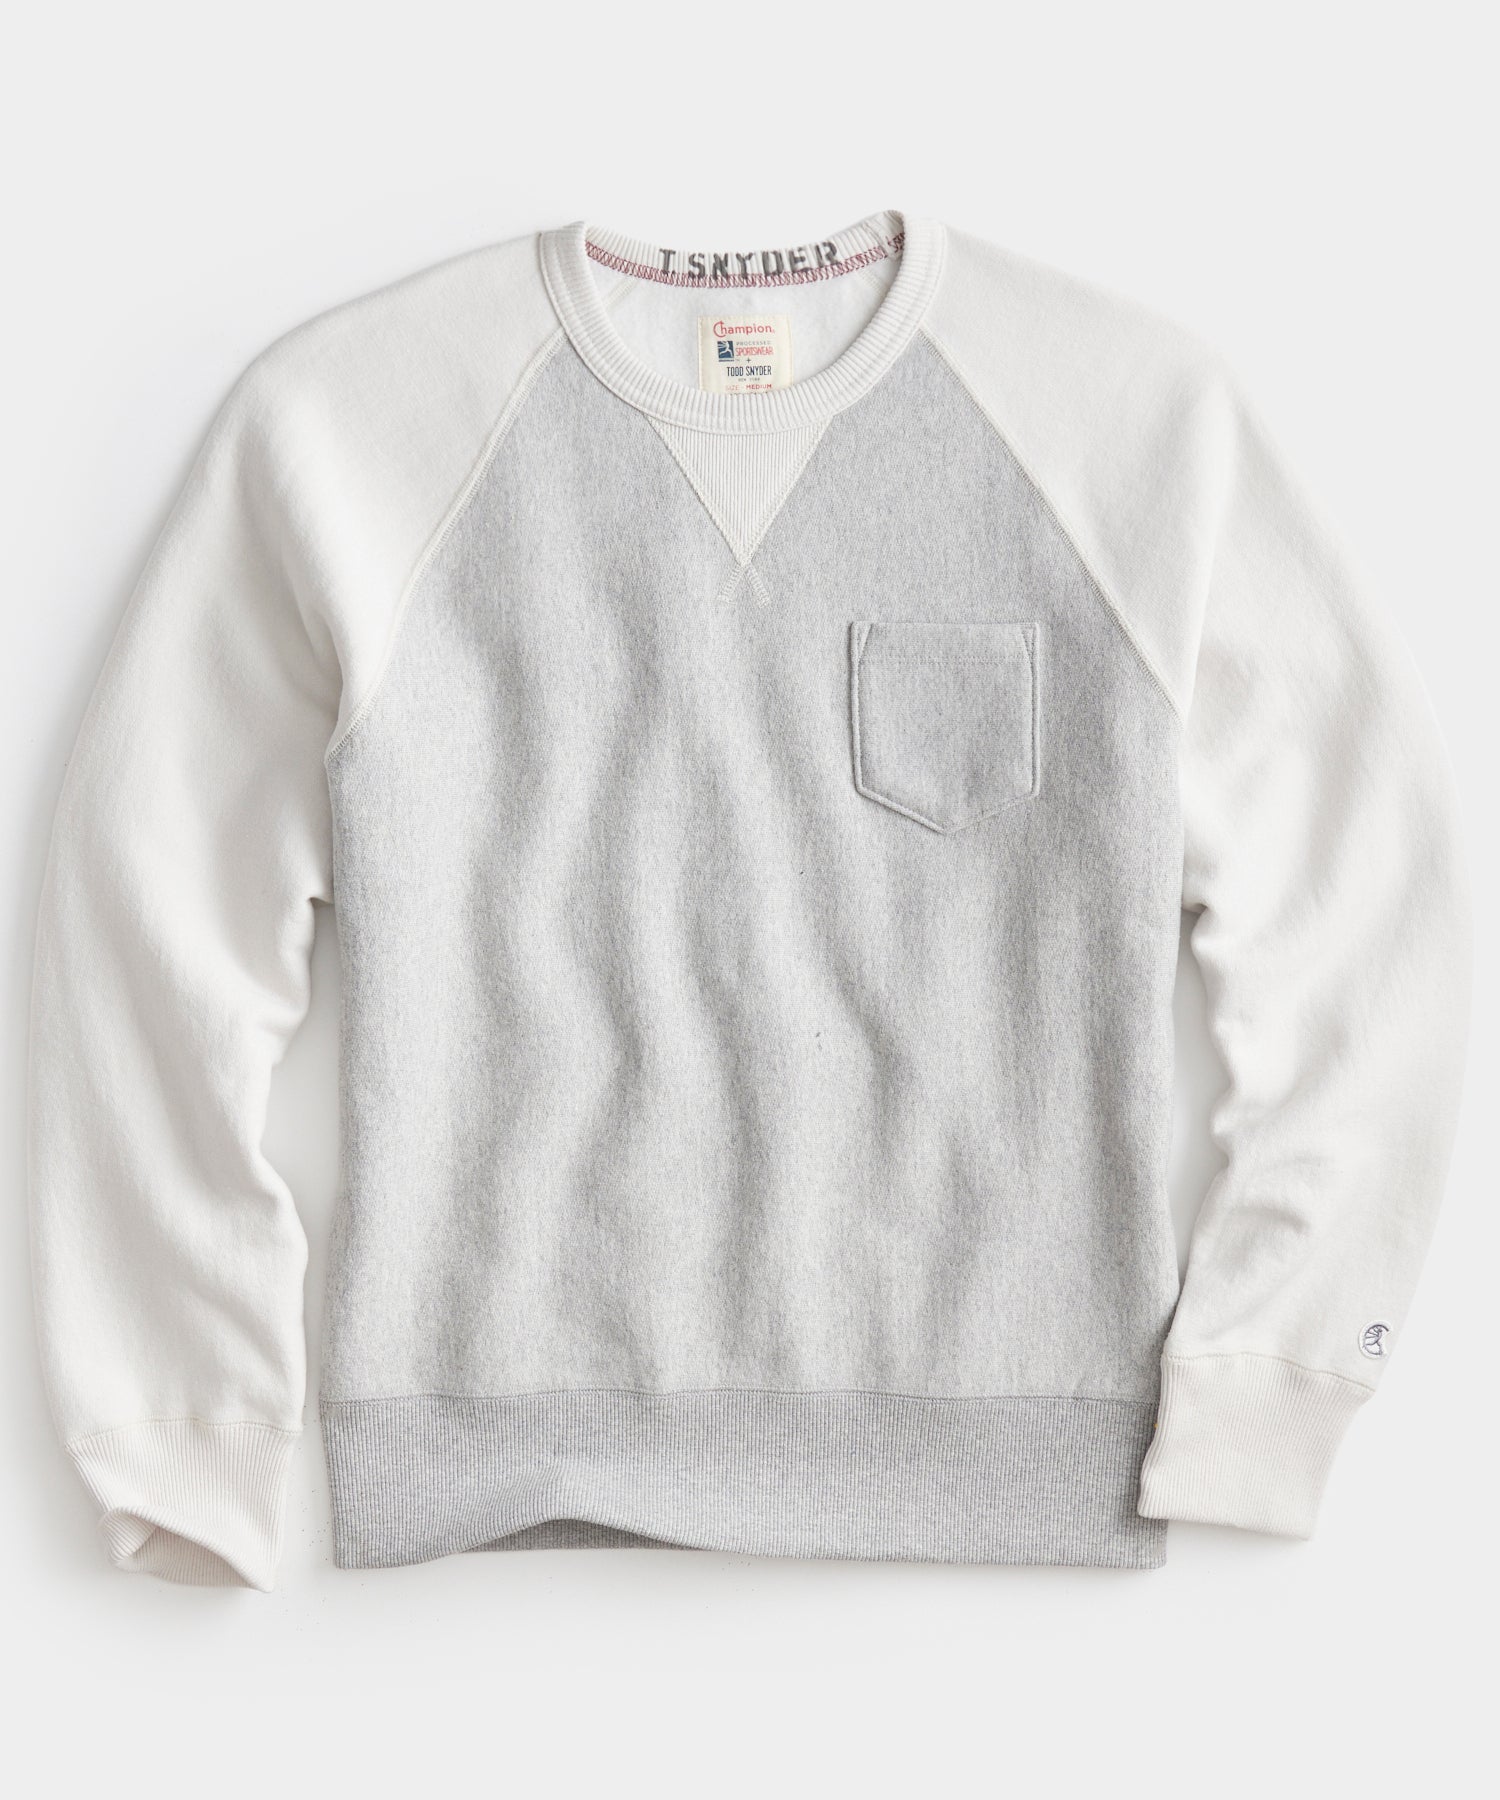 Colorblock Pocket Sweatshirt in Grey Mix